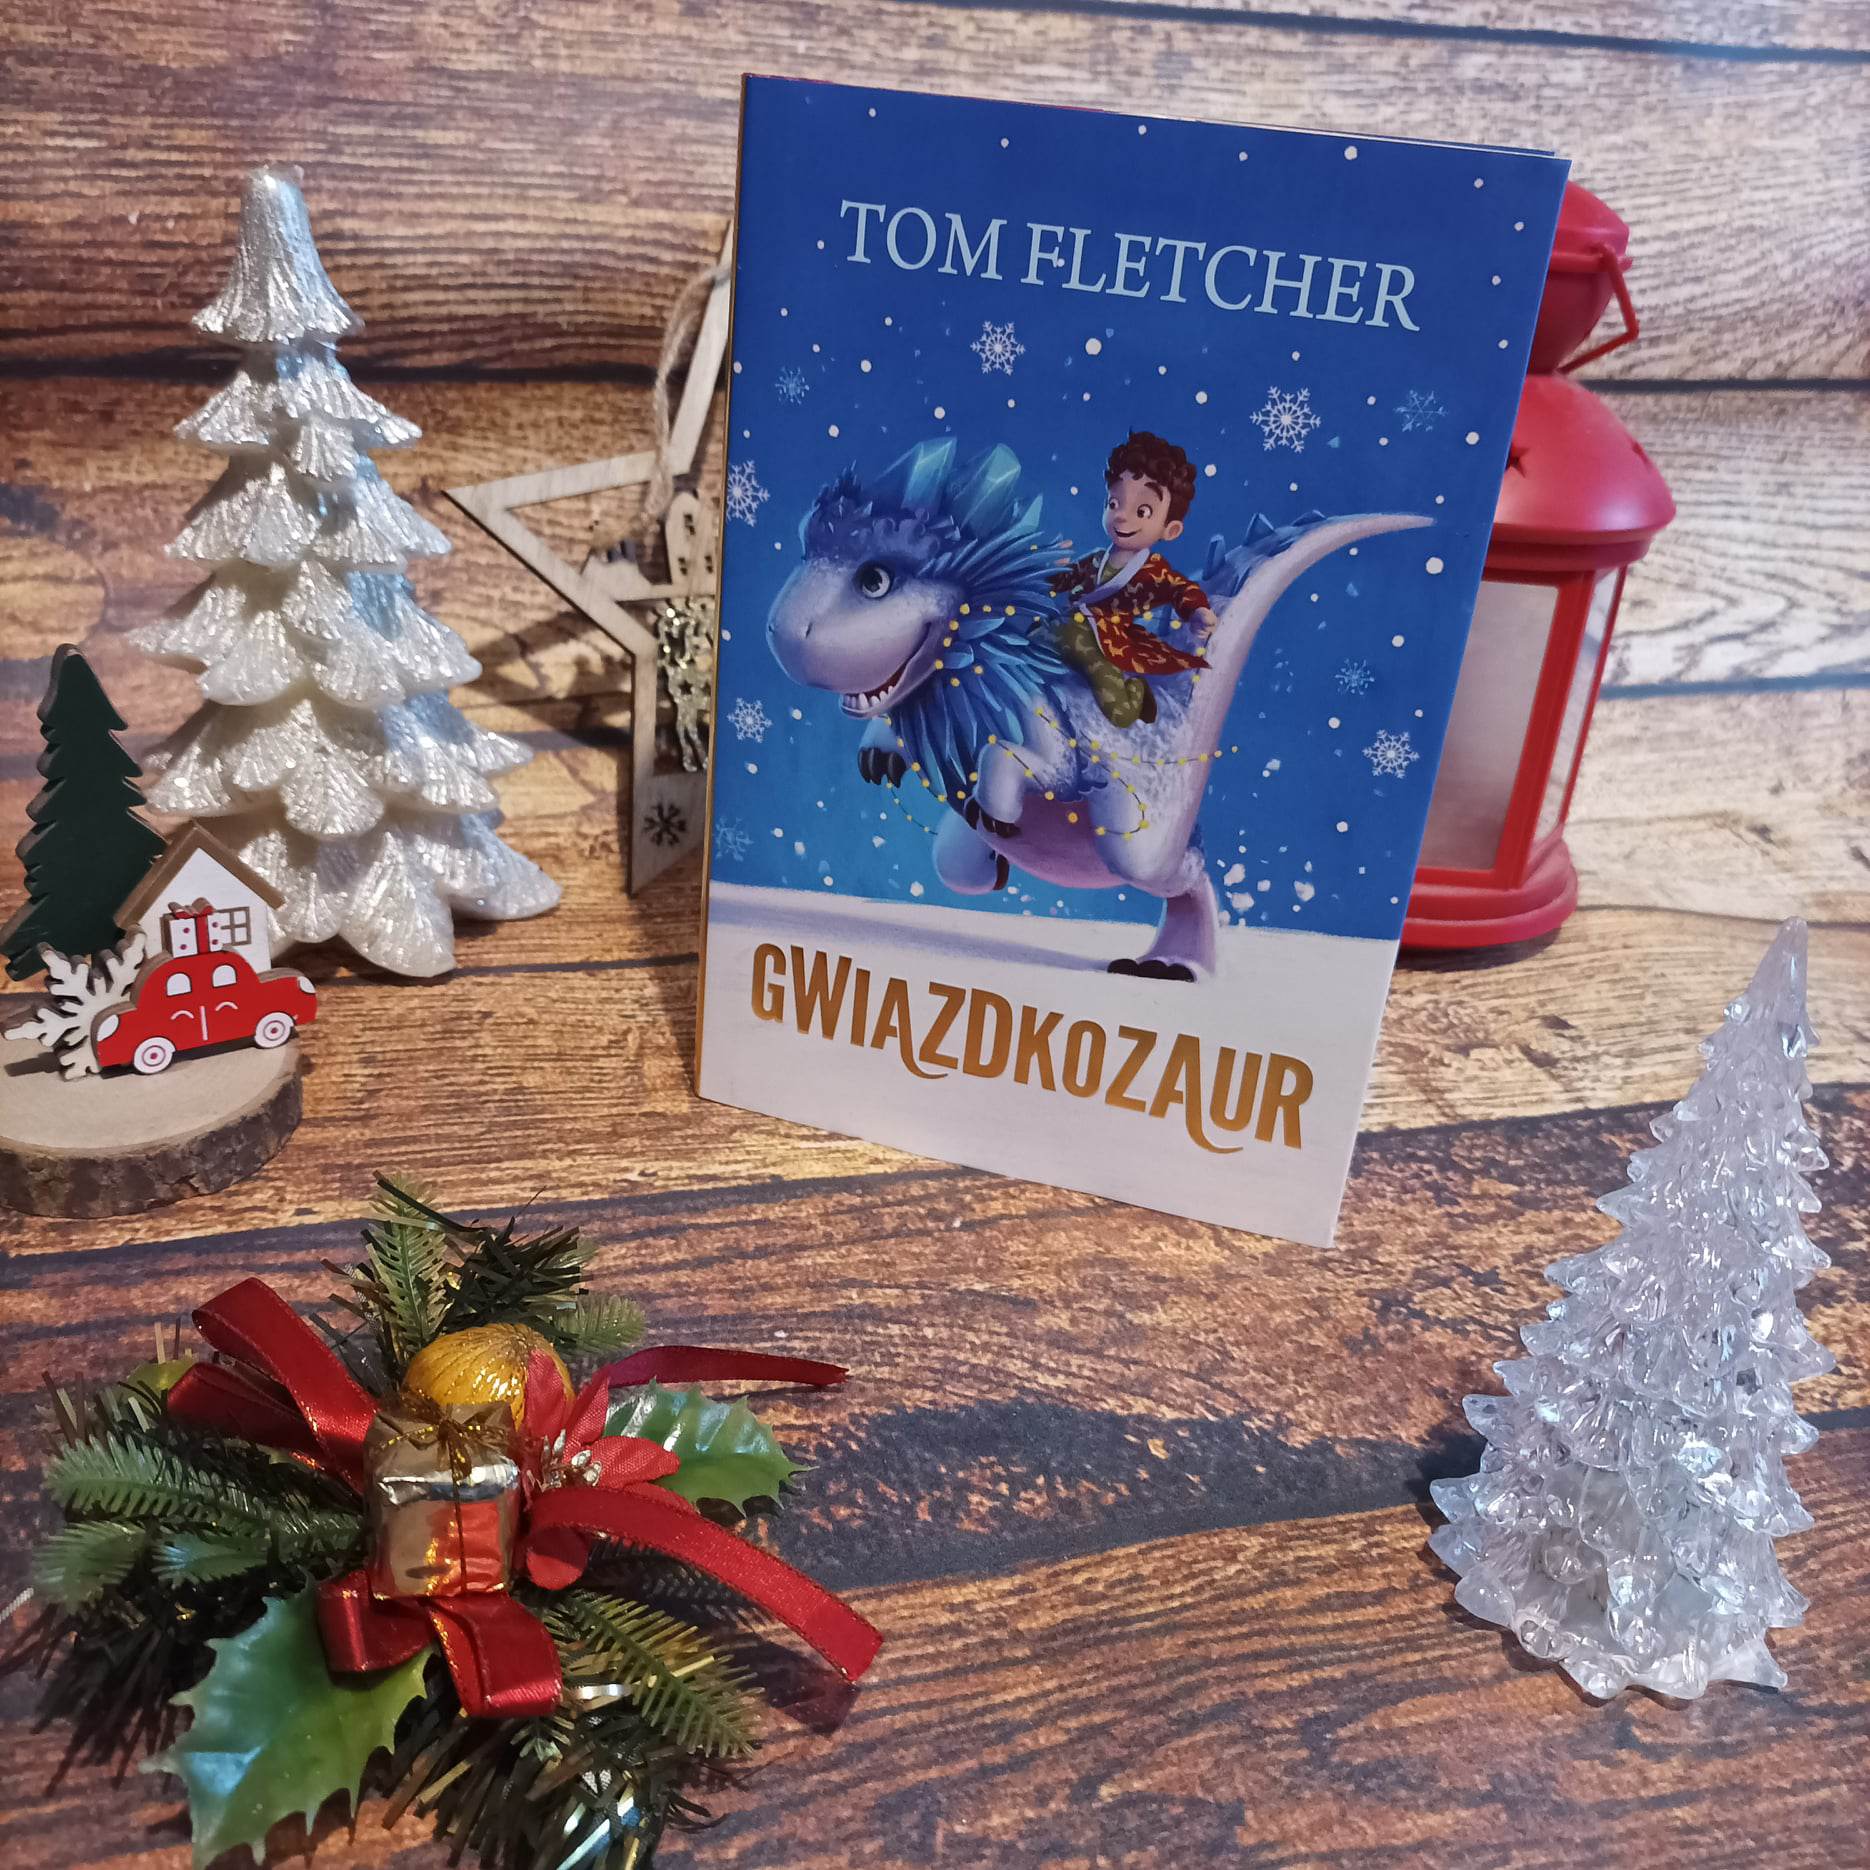 You are currently viewing Gwiazdkozaur Tom Fletcher [ChristmasBooks]